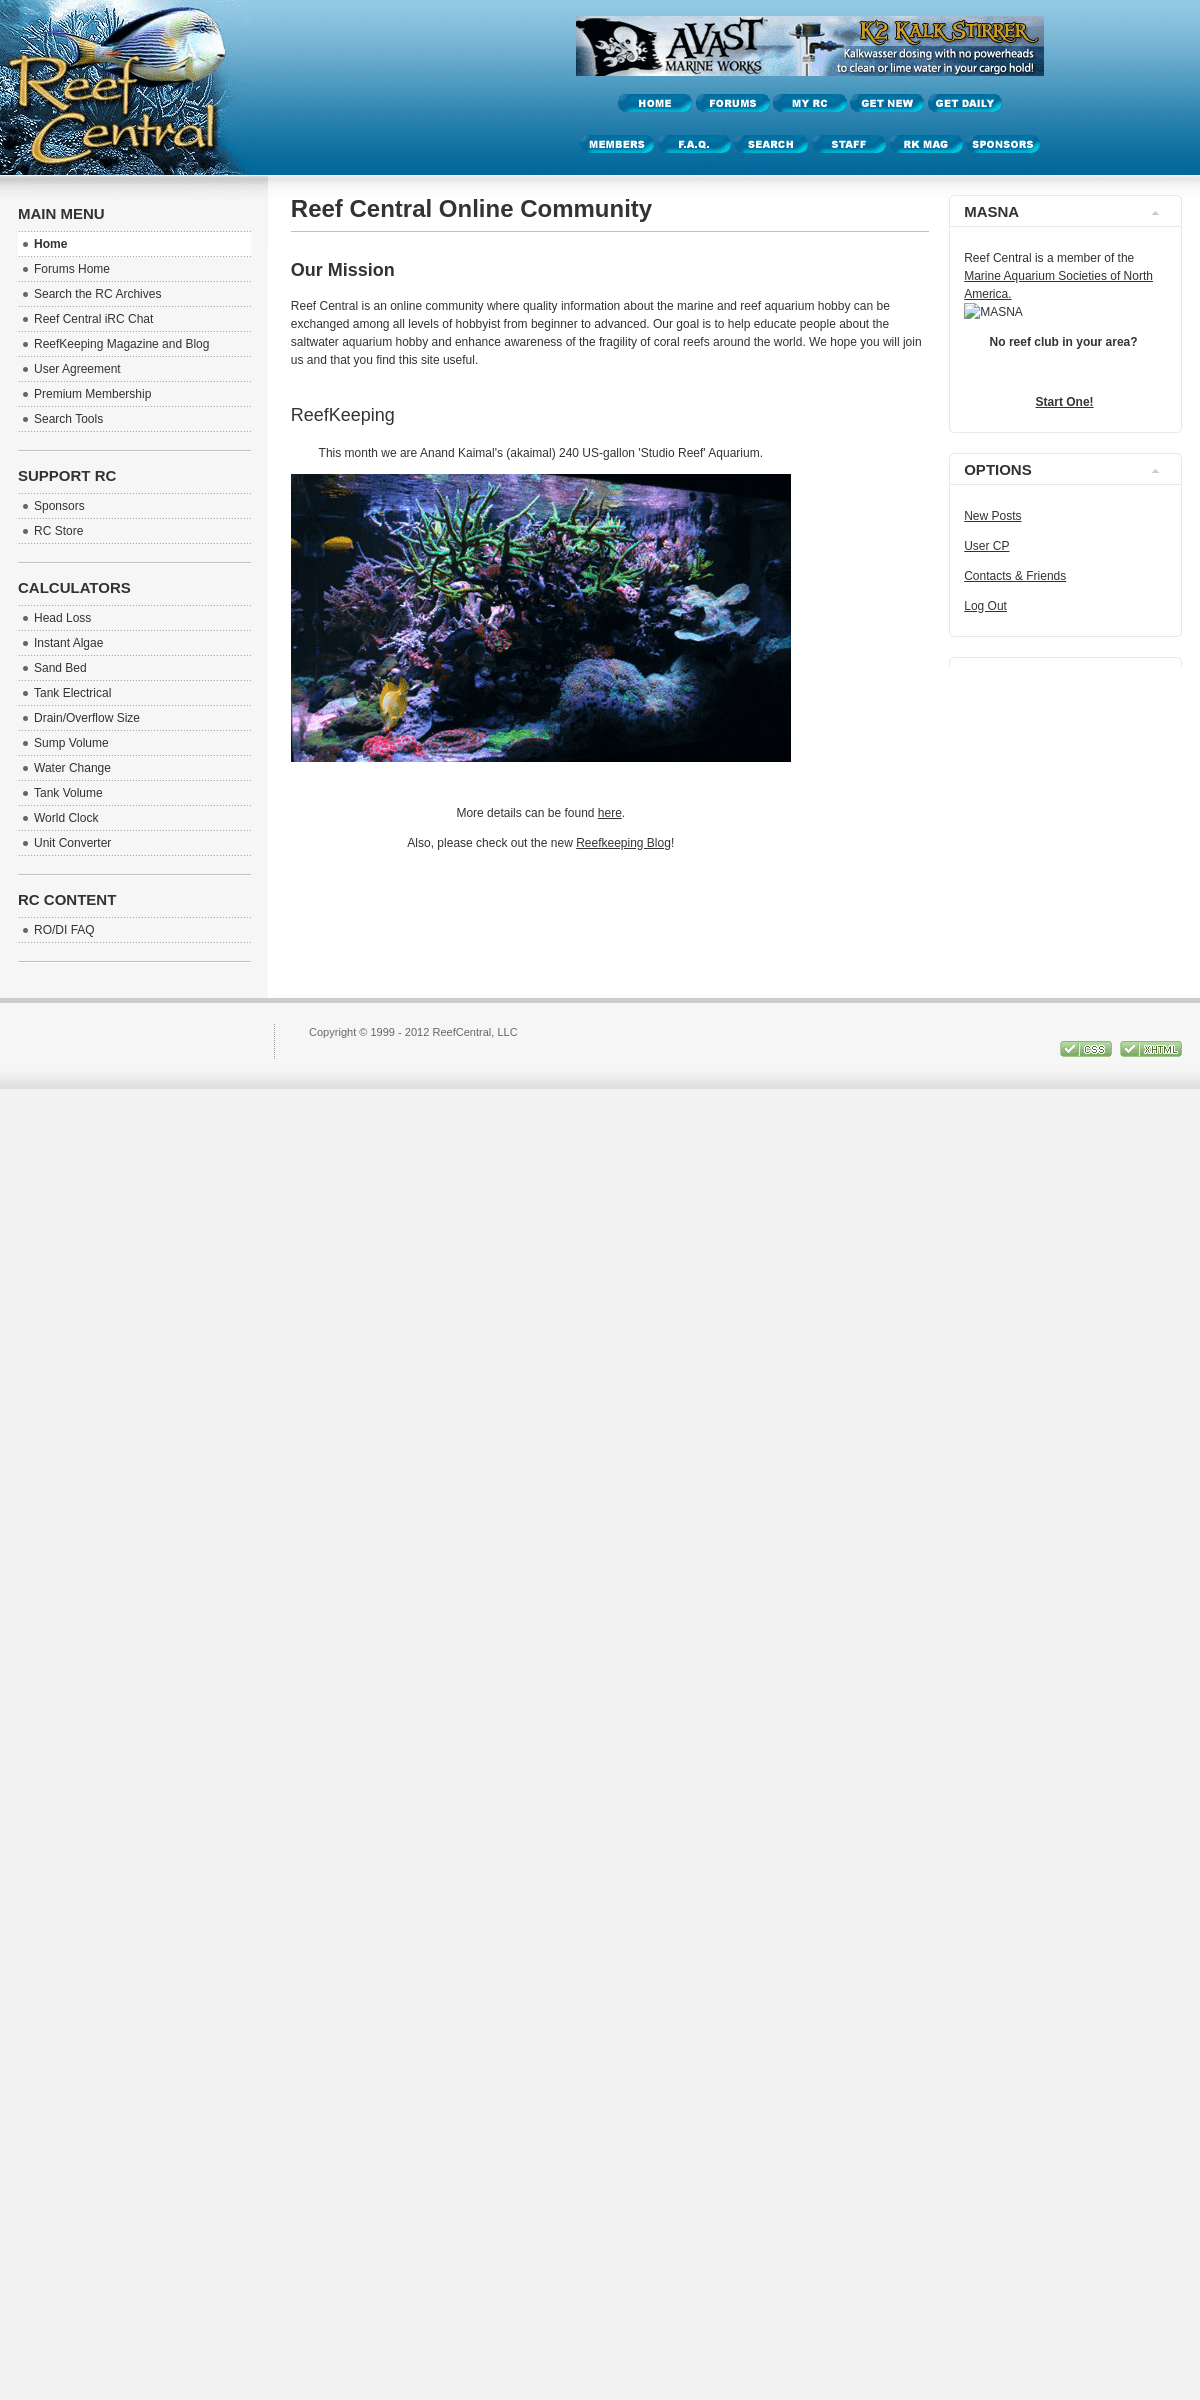 A complete backup of reefcentral.com